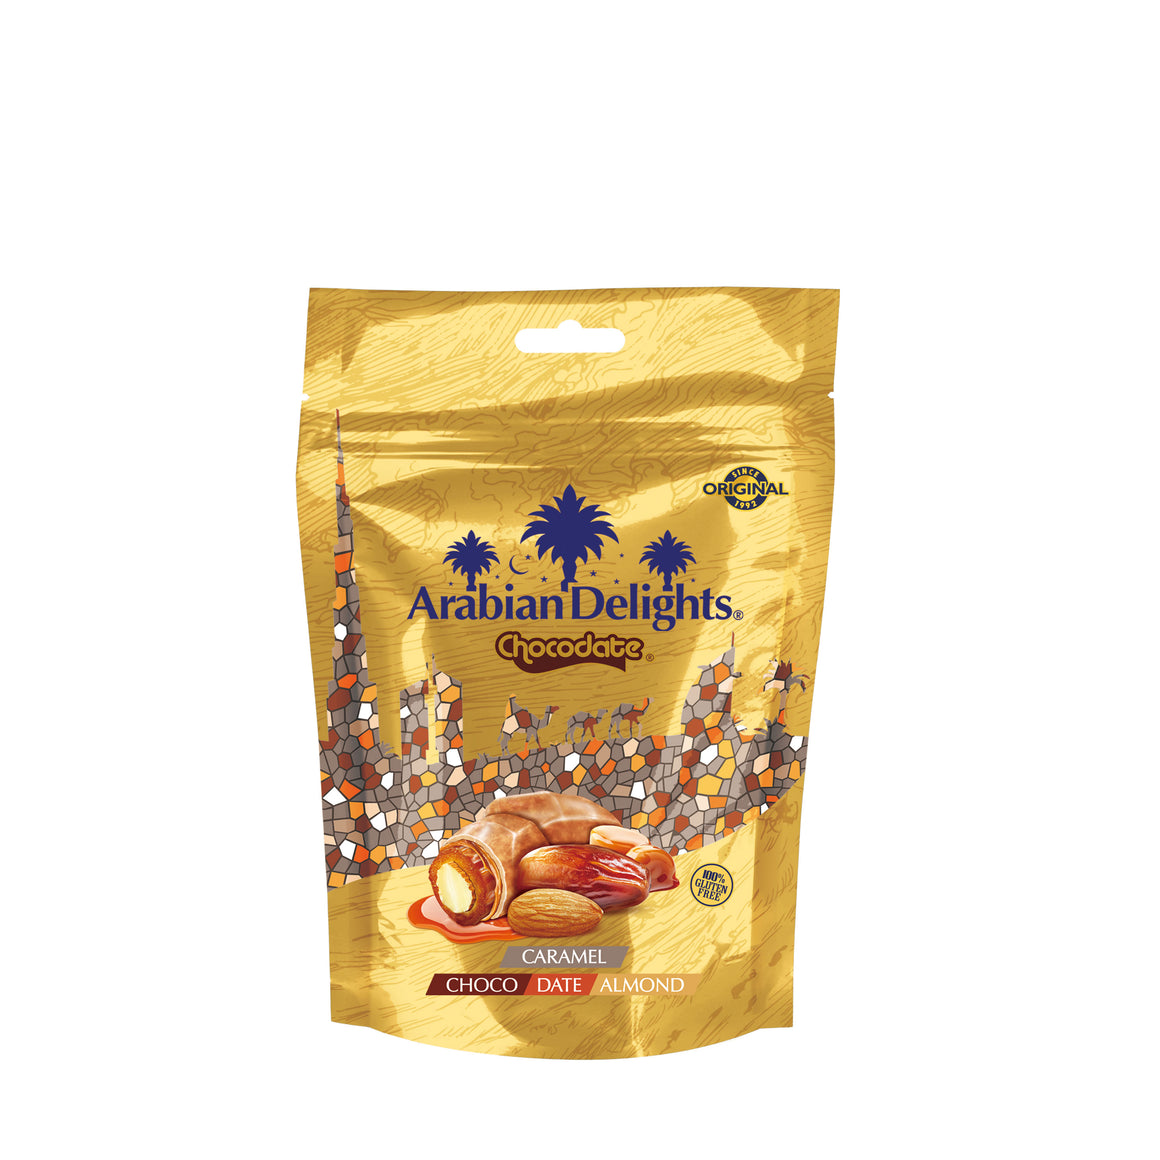 Arabian Delights Chocodate with Caramel, Chocolate Coated Bite-Sized Snacks, Stuffed w/ Golden Roasted Almonds, Dates | Snacks & Sweets - 90 gm